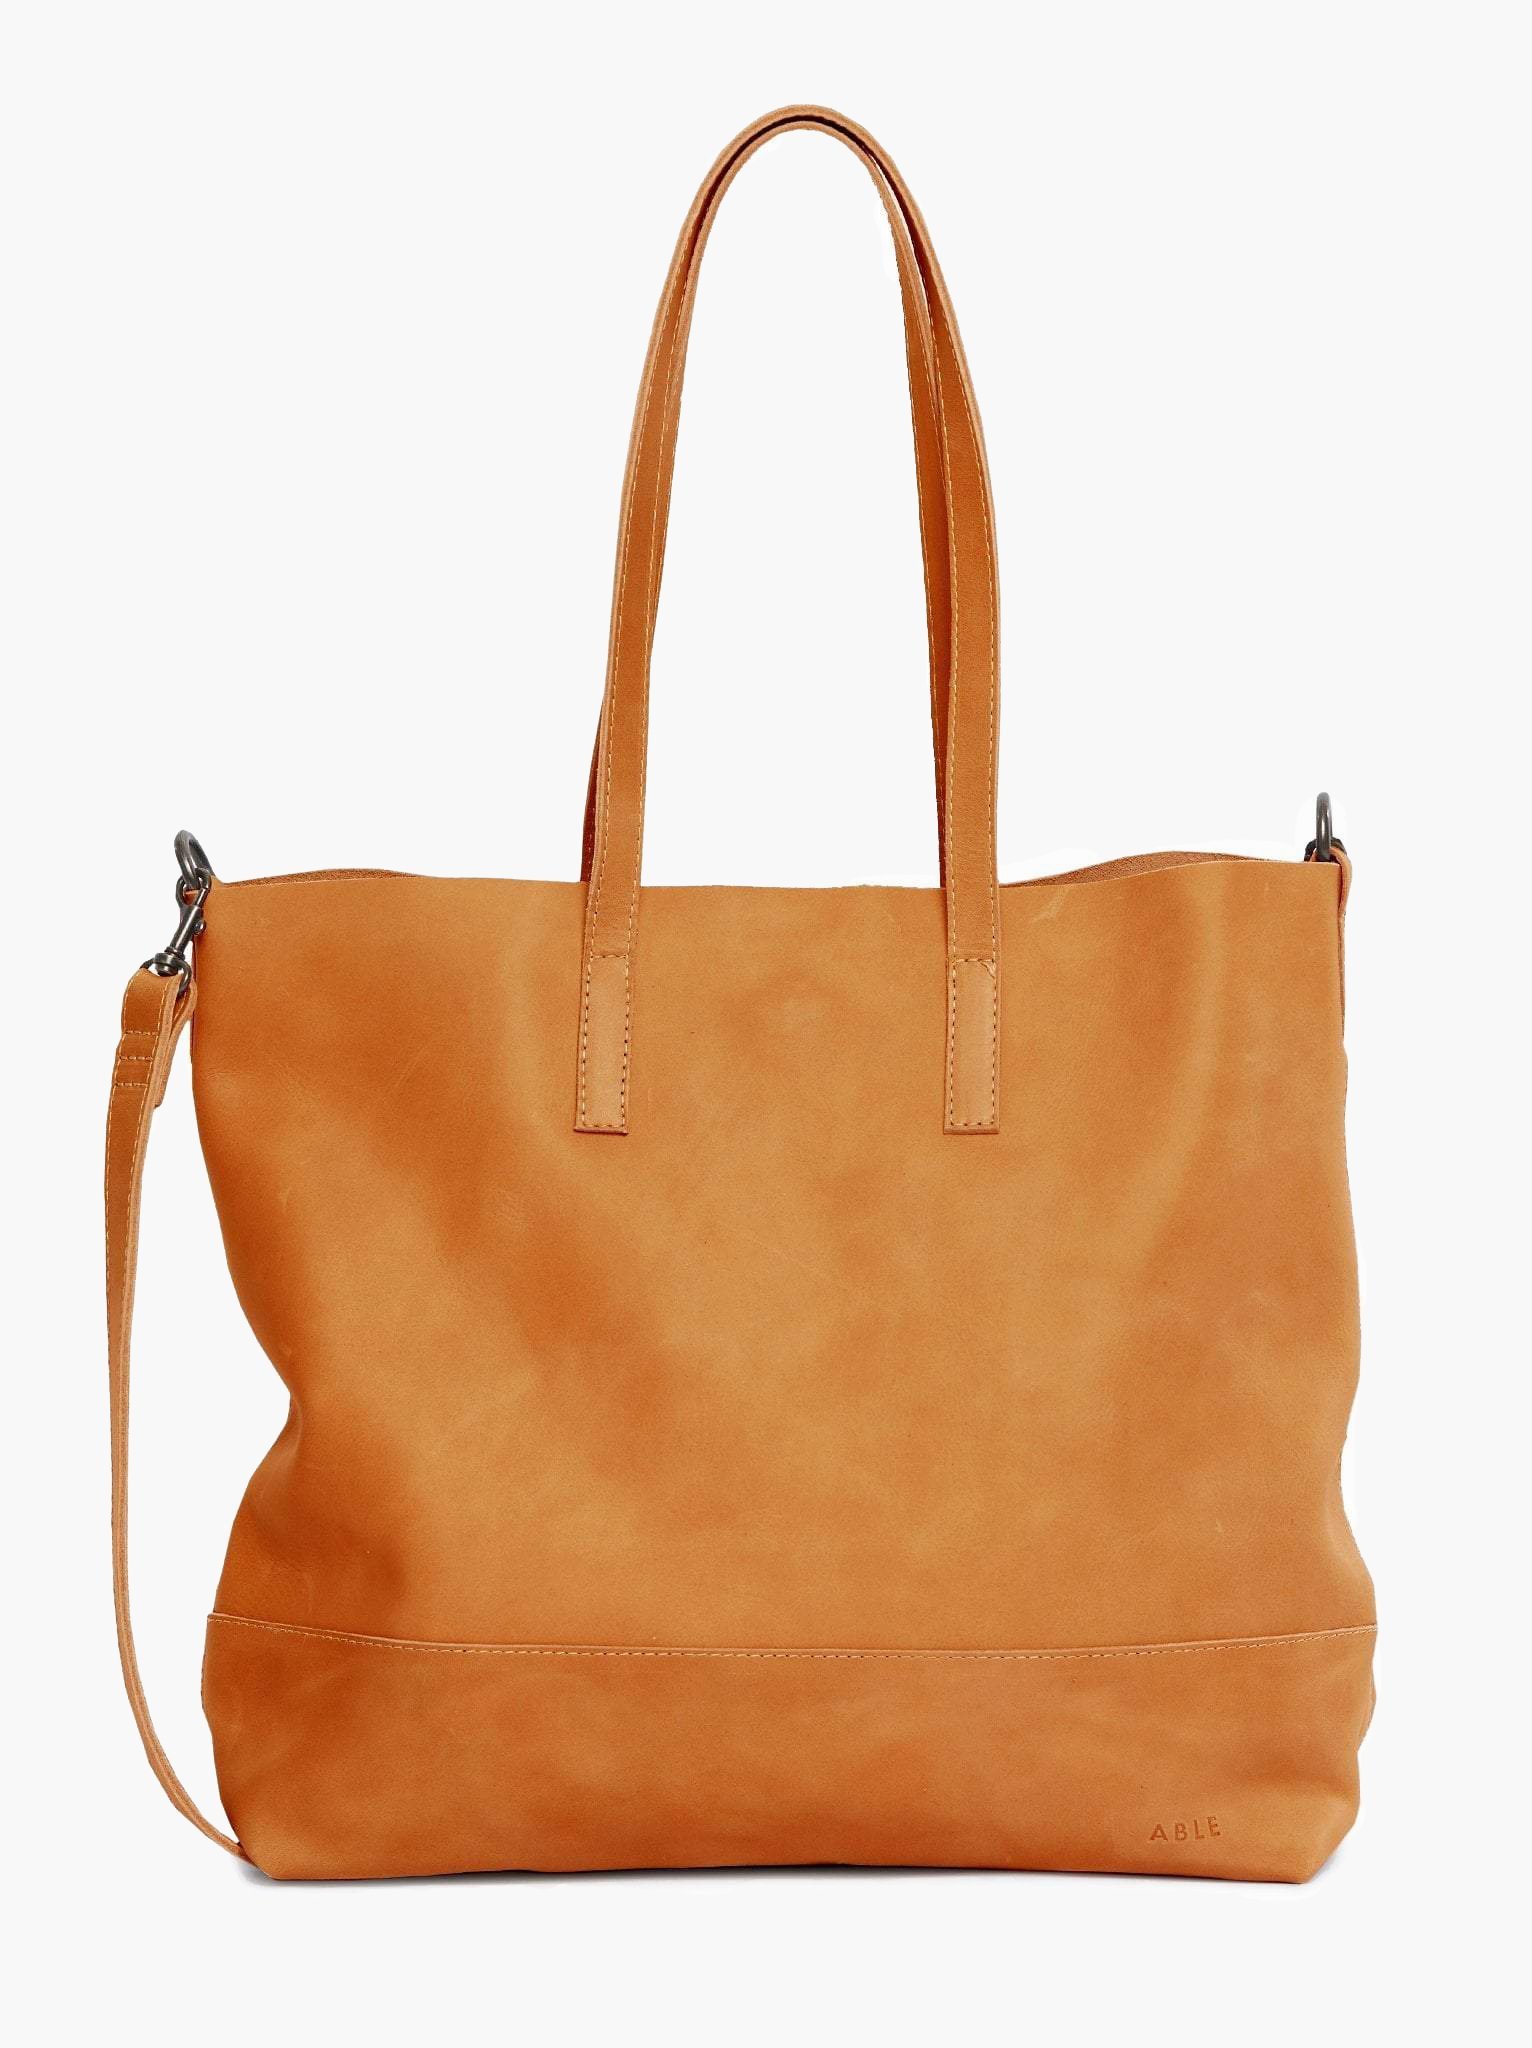 Vickcy Aphmau Handbag，Women’s Made Of Fine Leather Shoulder Tote Bag Fashion Big Capacity Crossbody.